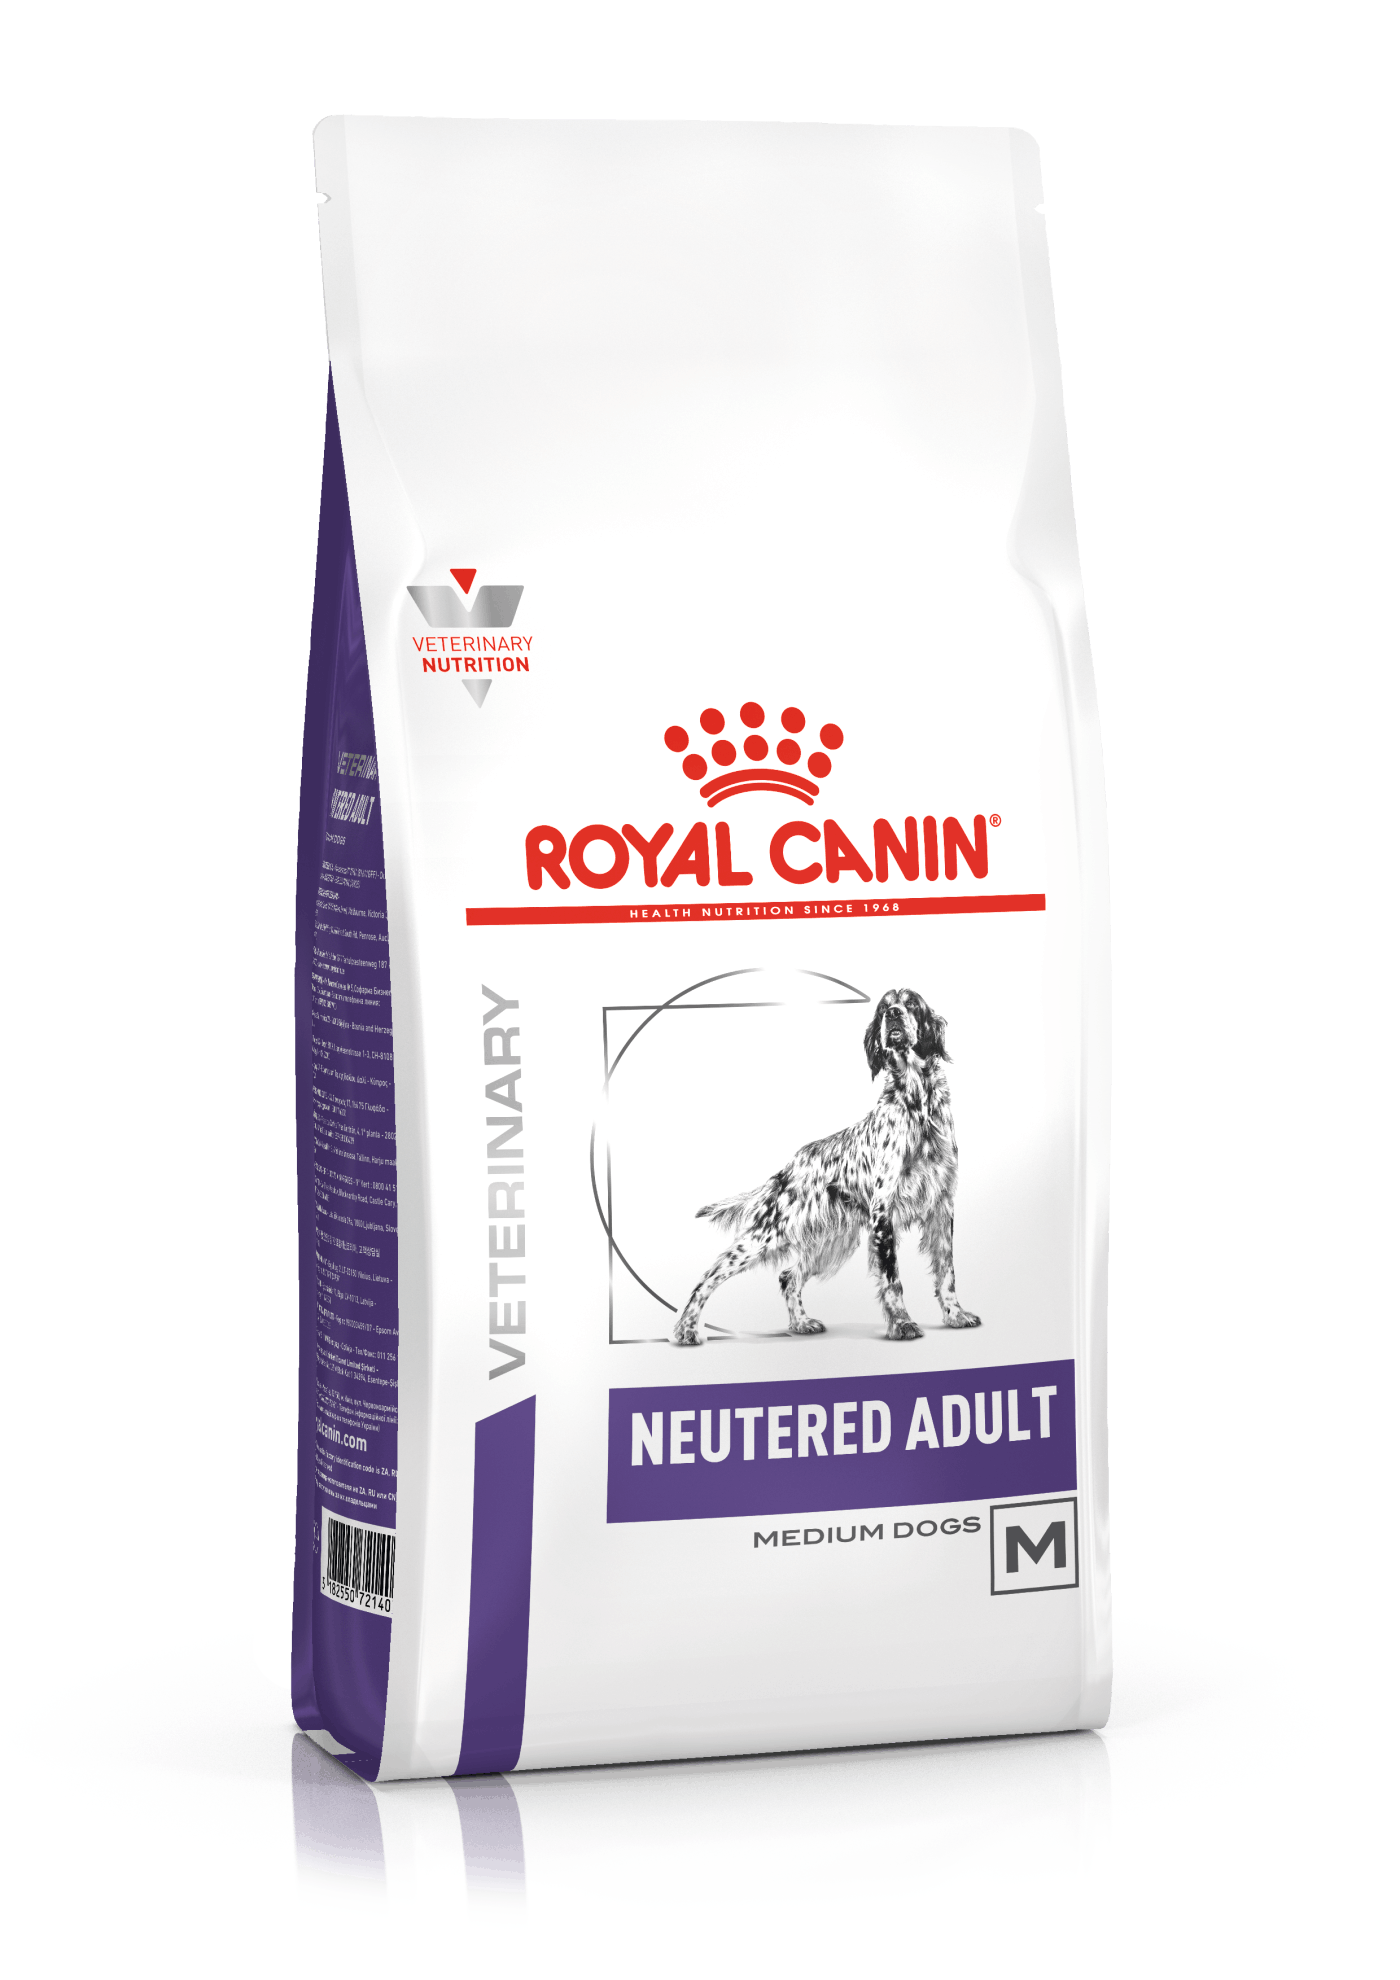 Neutered Adult Royal Canin 9